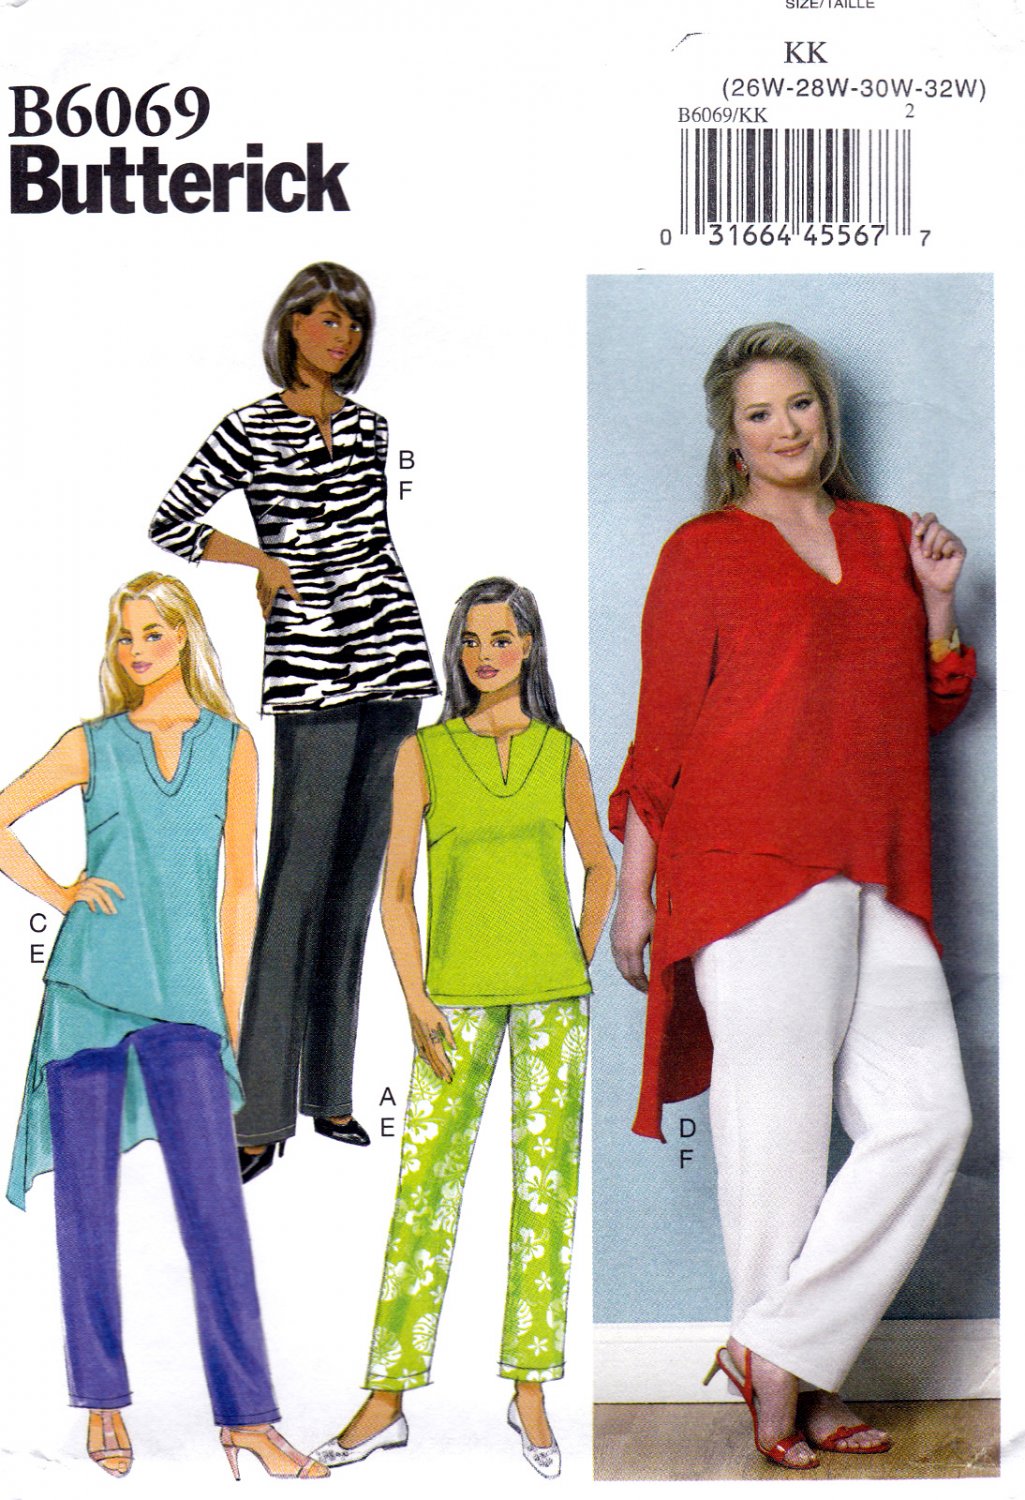 Butterick B6069 6069 Womens Pullover Tunic Pants Sewing Pattern Sizes 26W-28W-30W-32W